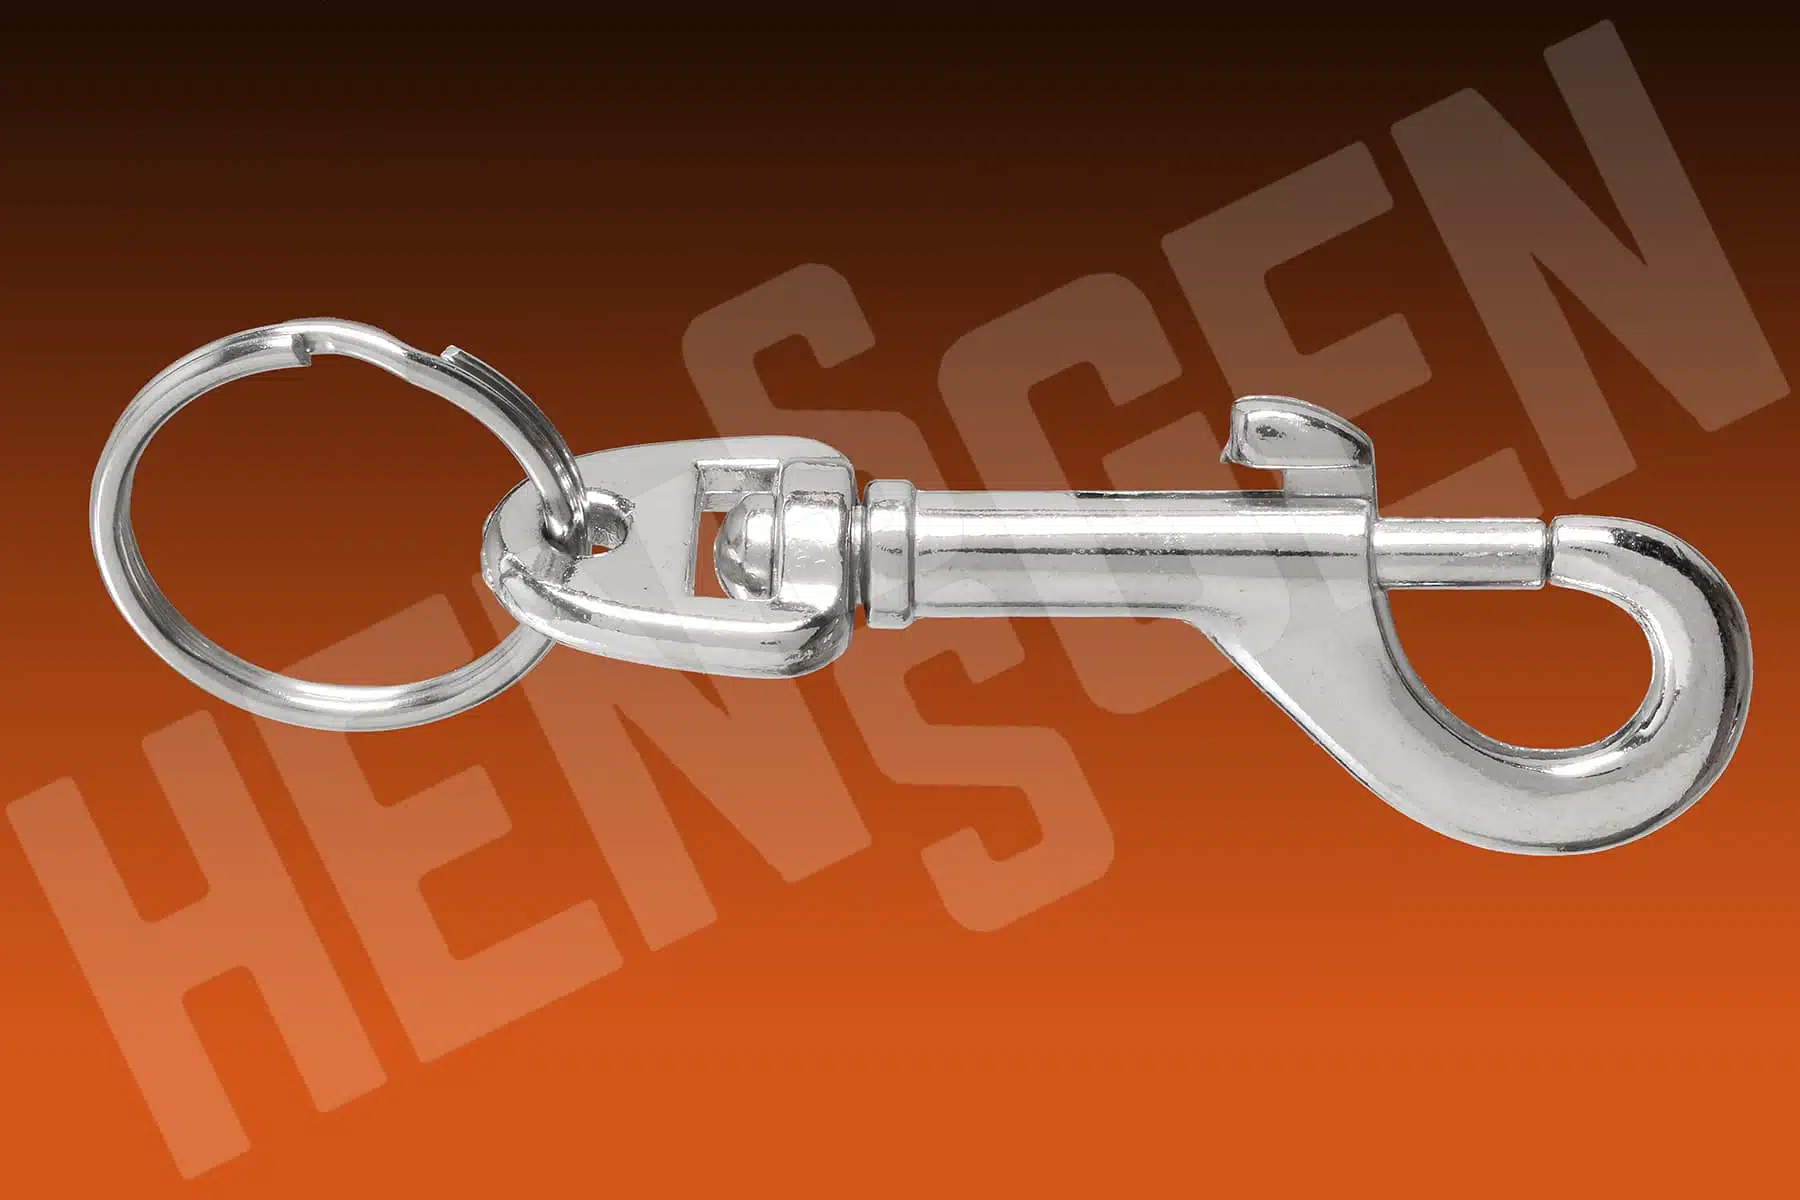 4pcs 3 Locking Hook Aluminum D Ring Clip Screw Gate Keychain, Black Orange  - Black, Orange - Bed Bath & Beyond - 37829658